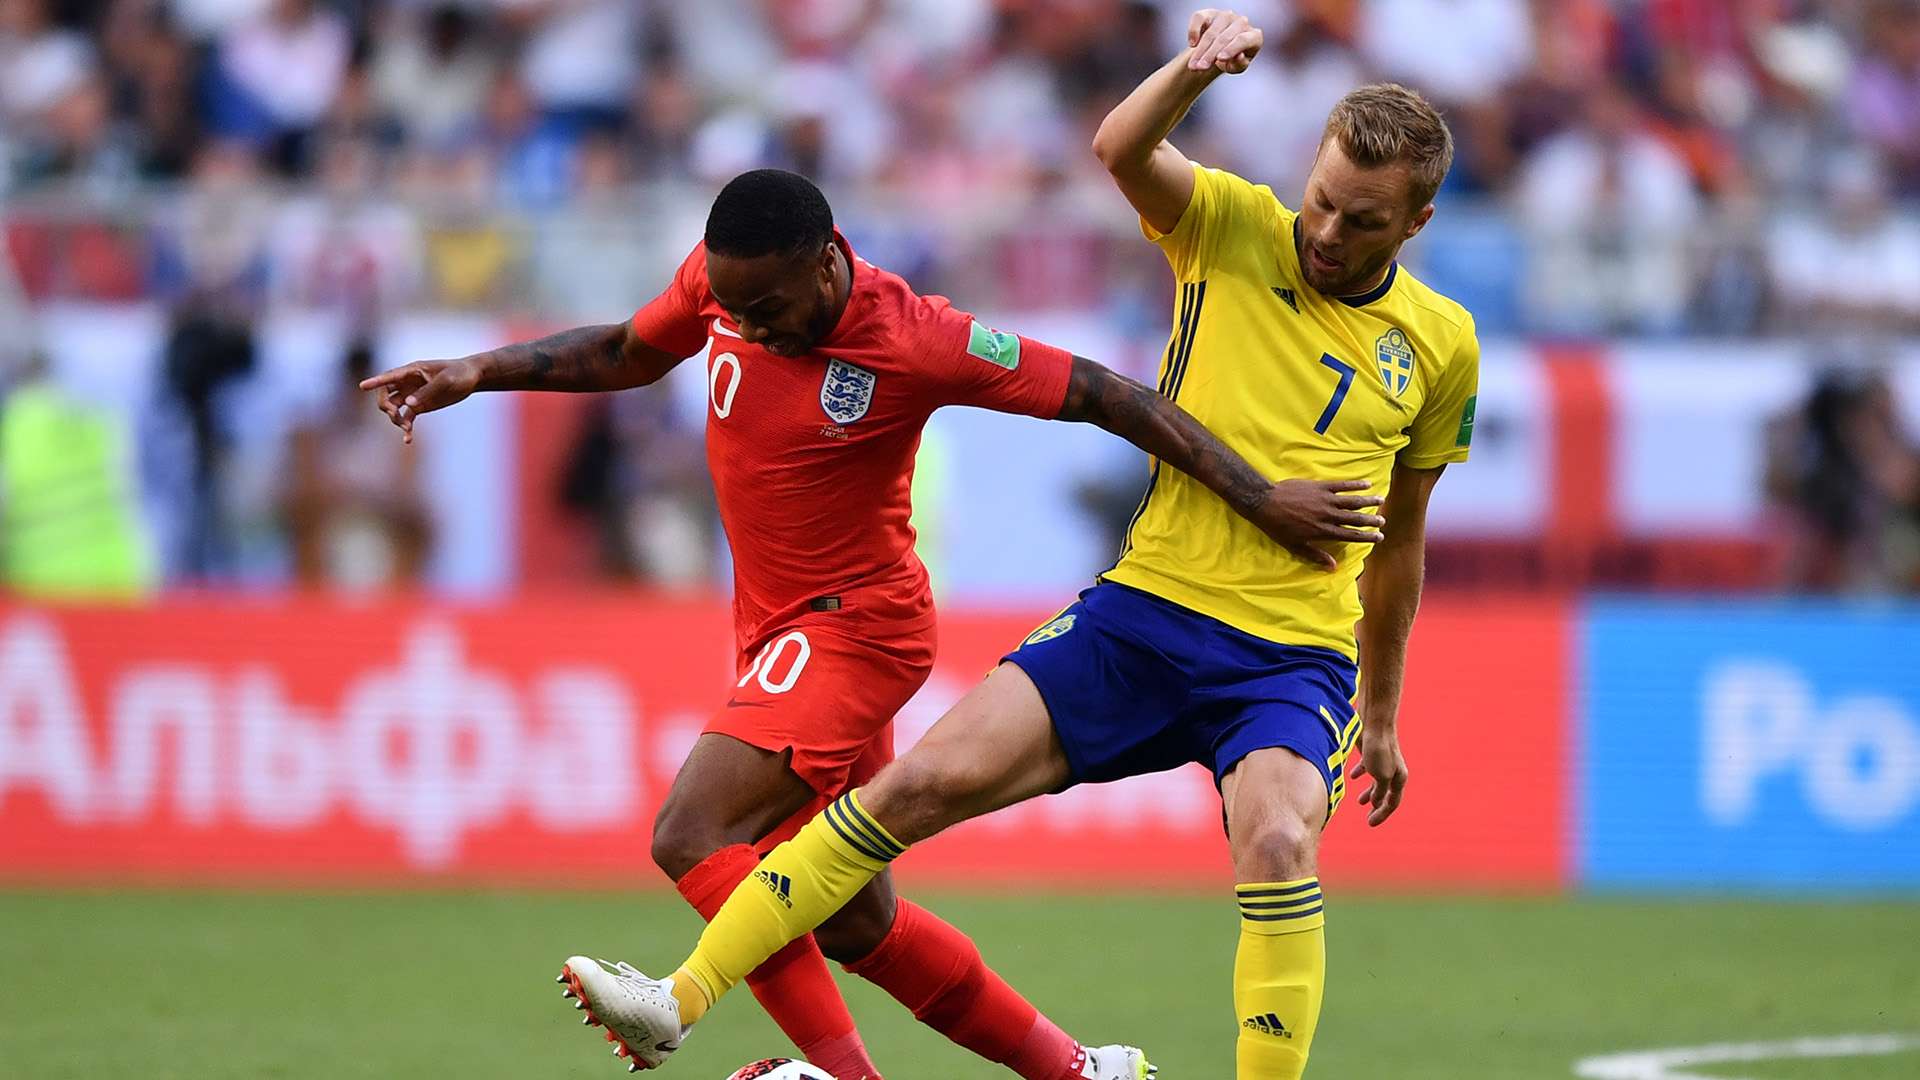 Raheem Sterling Sebastian Larsson Sweden England World Cup 2018 070718